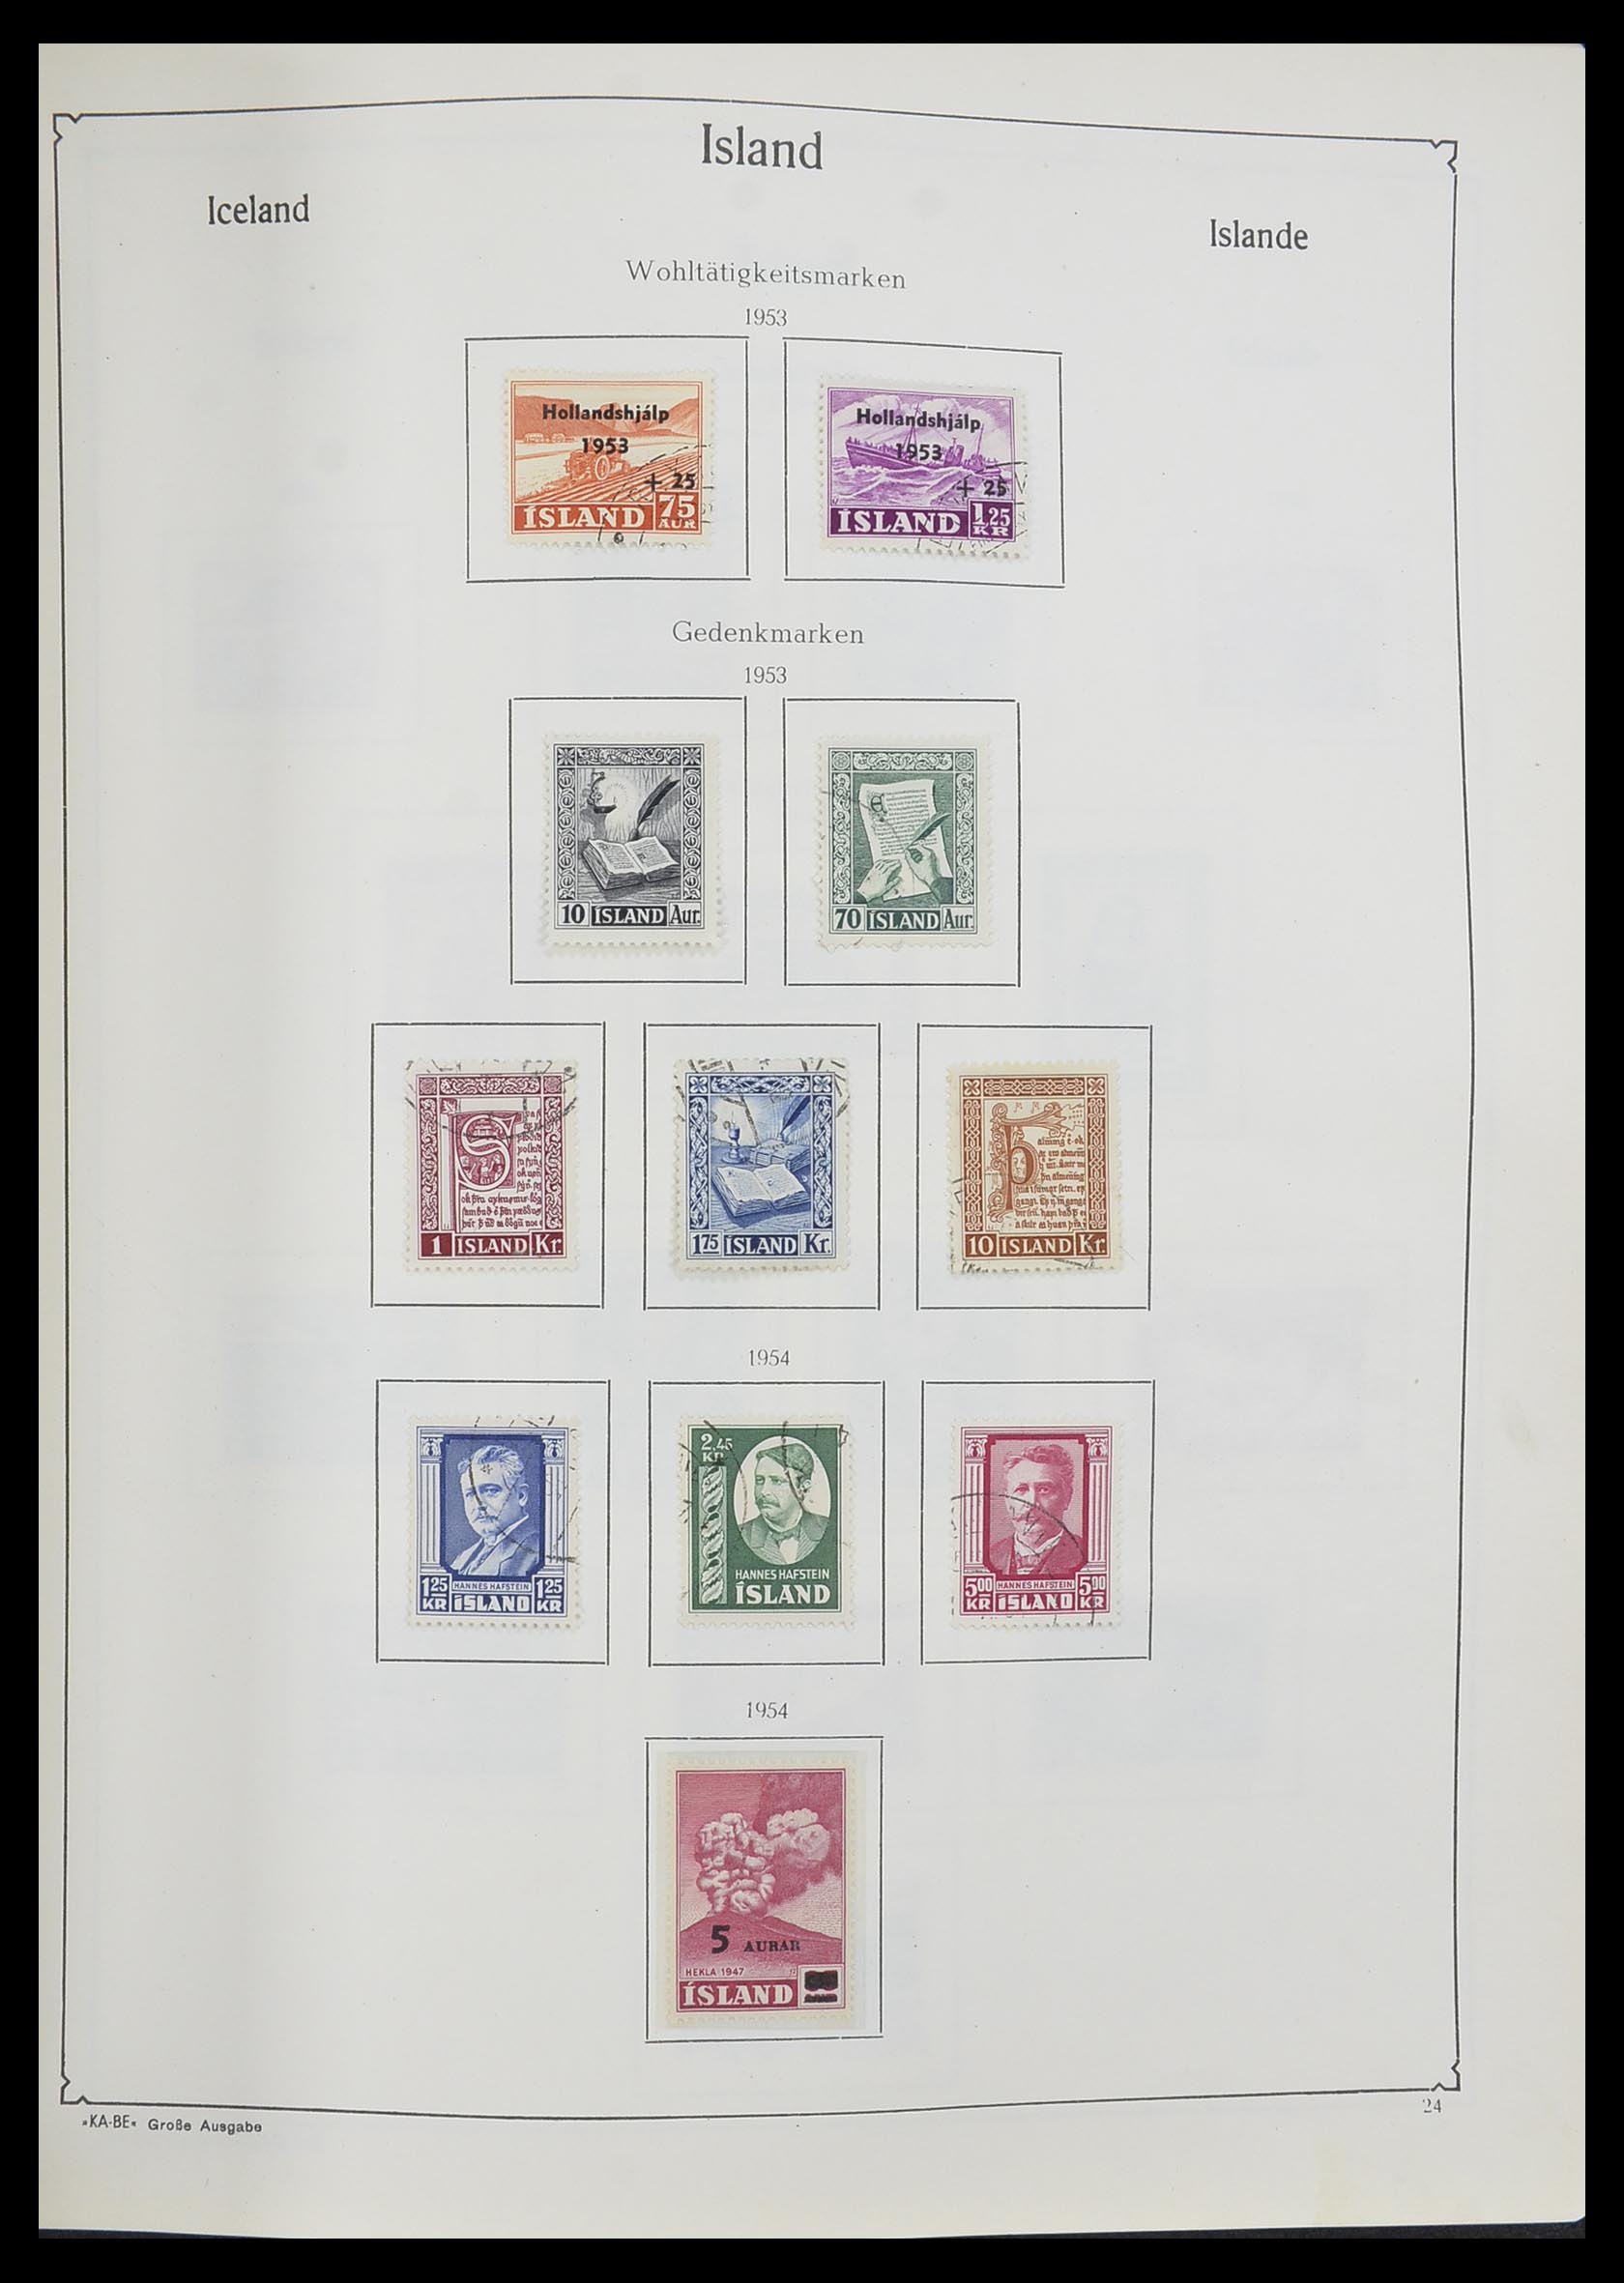 33379 080 - Stamp collection 33379 Scandinavia 1856-1972.